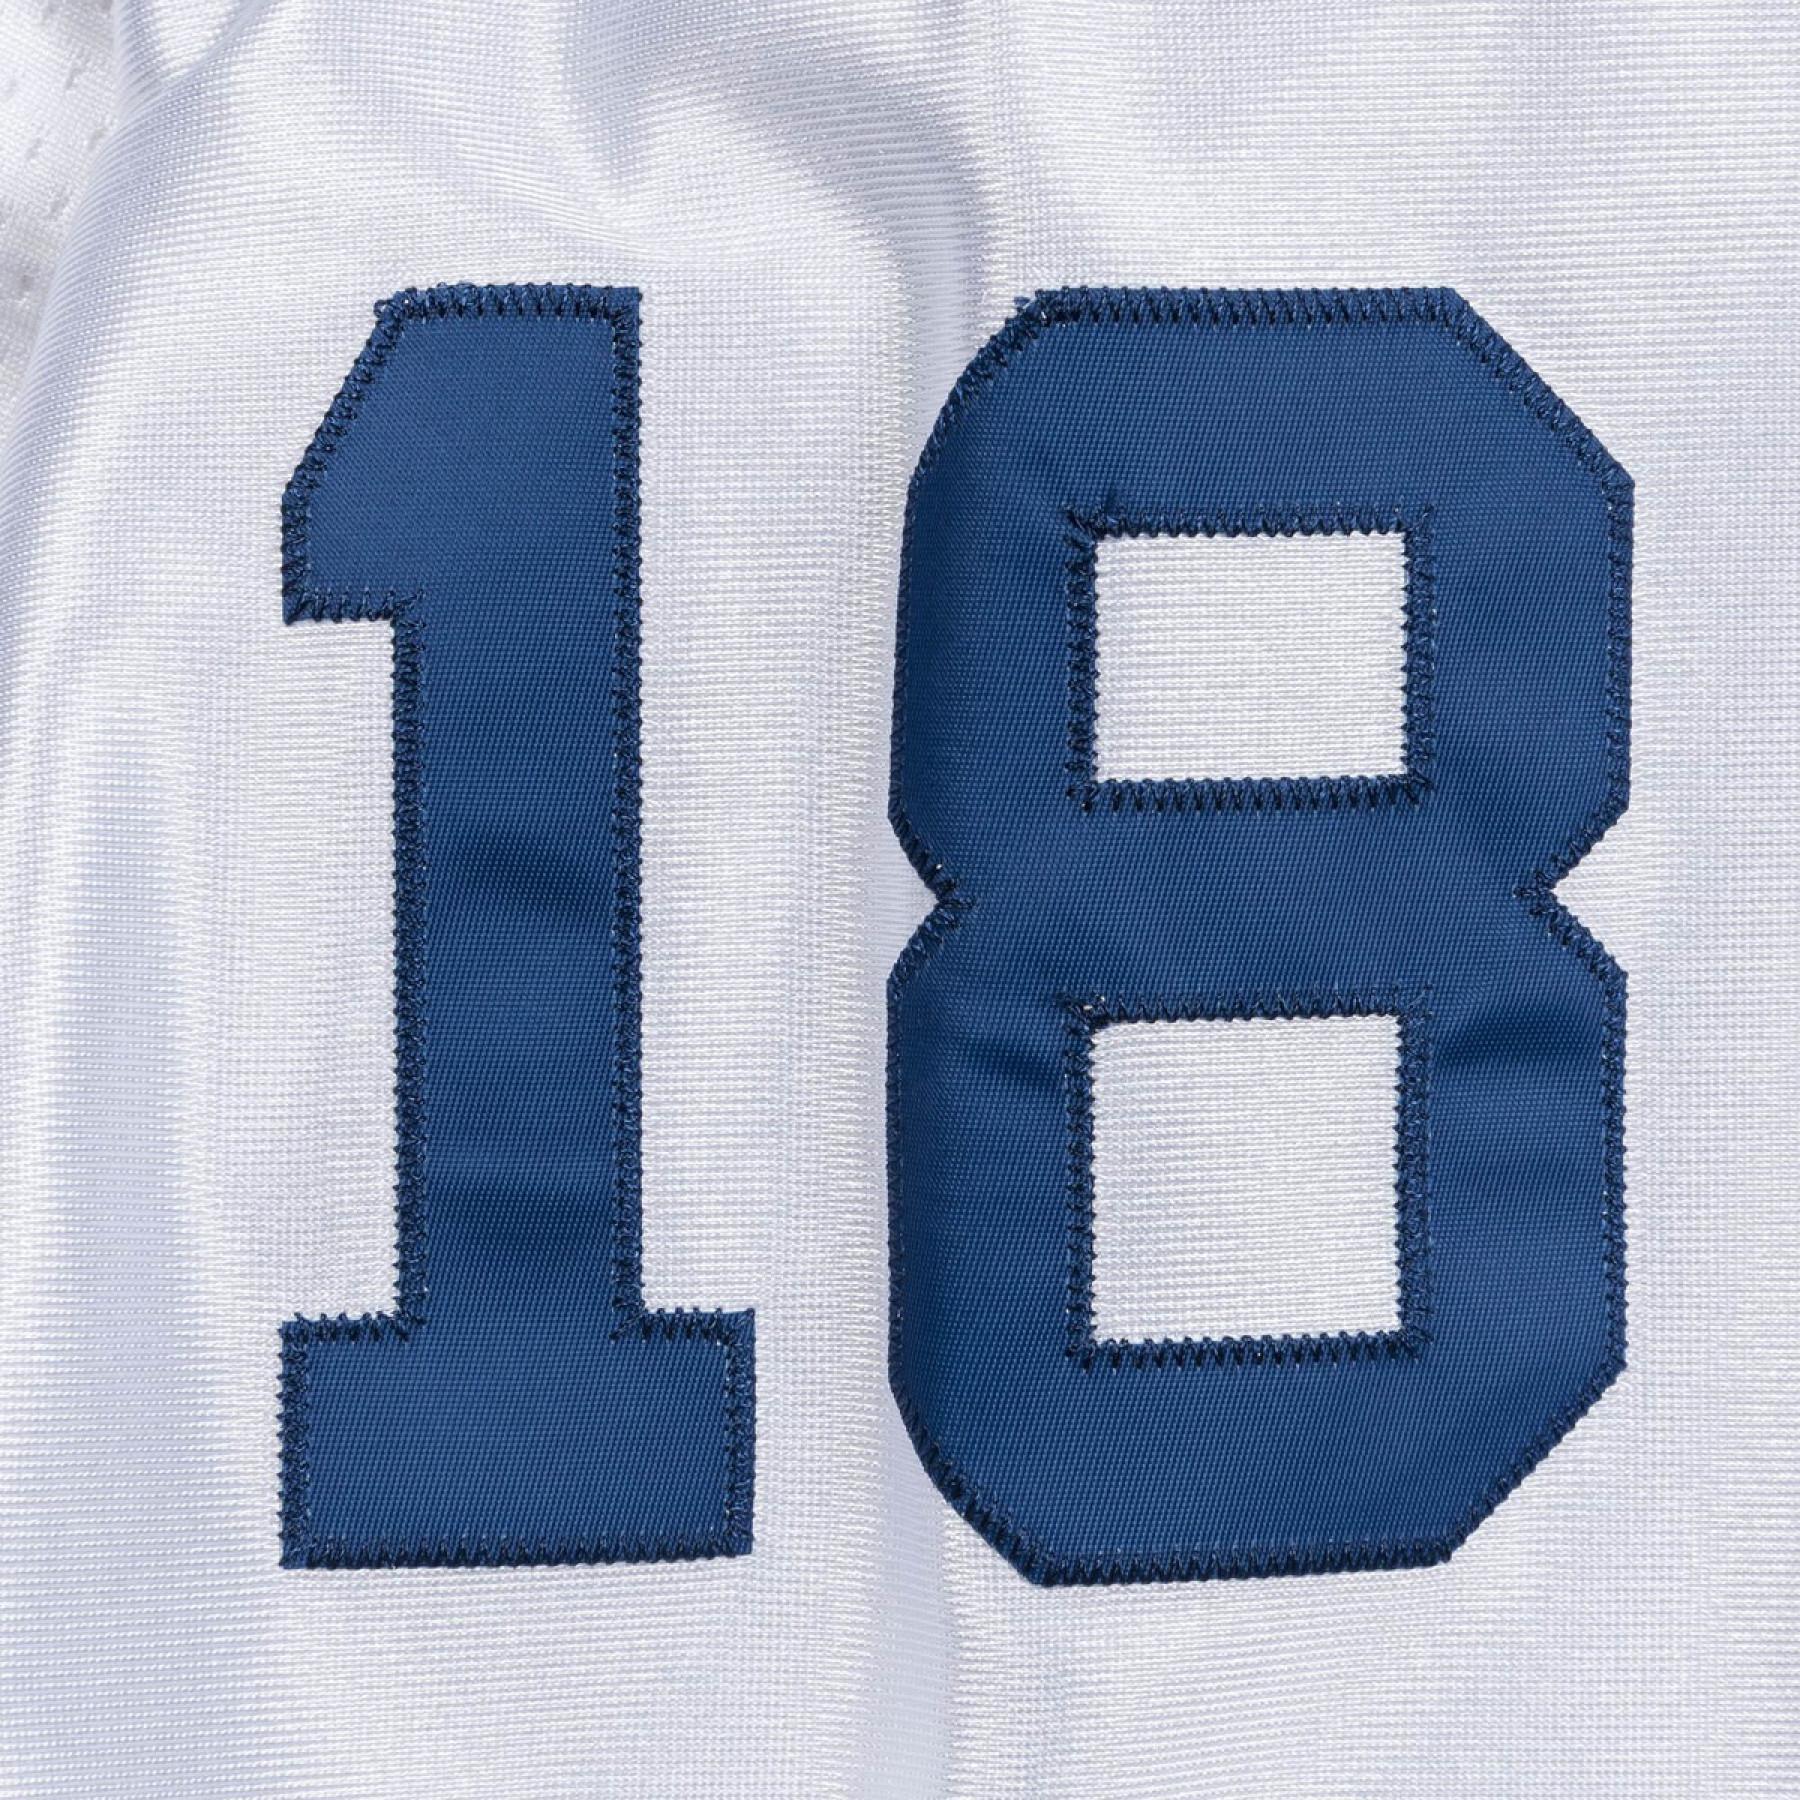 Camisola autêntico Indianapolis Colts Peyton Manning